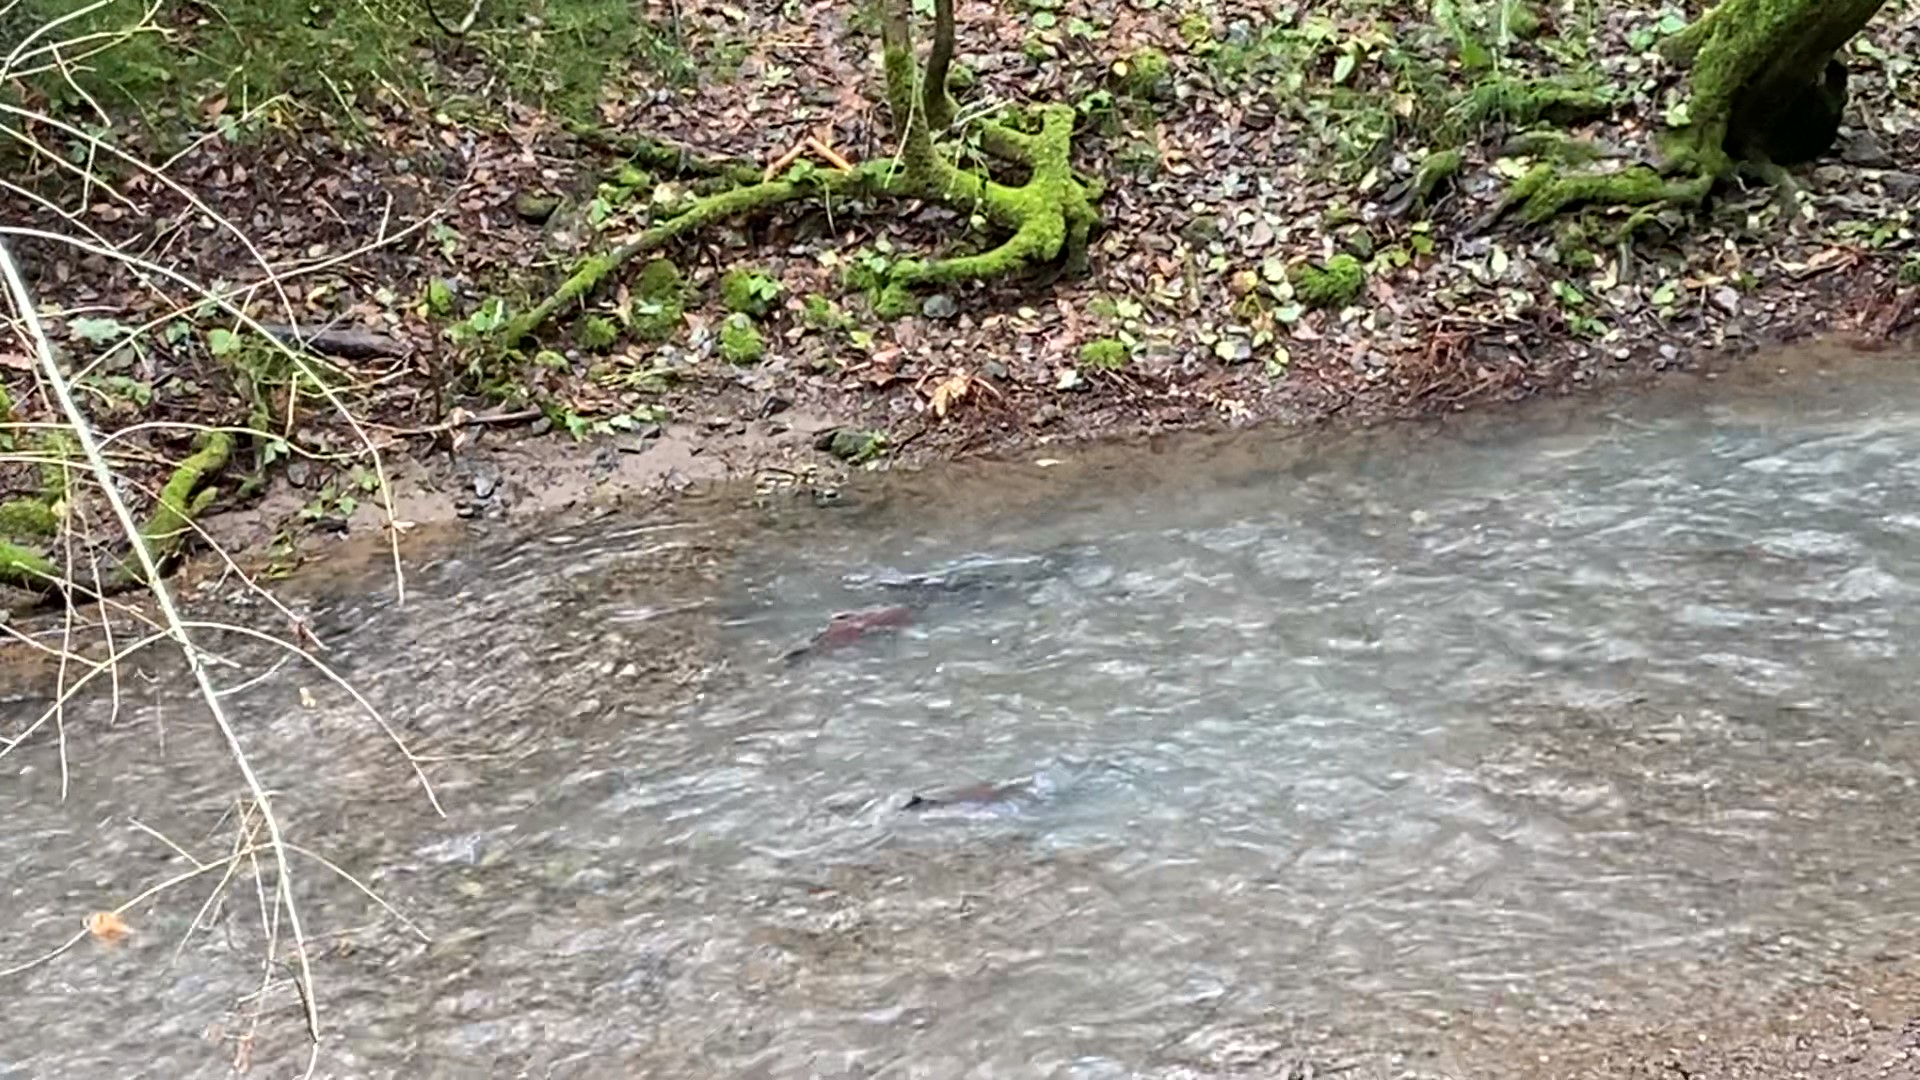 Media Advisory: Coho Salmon Spawning in Marin County